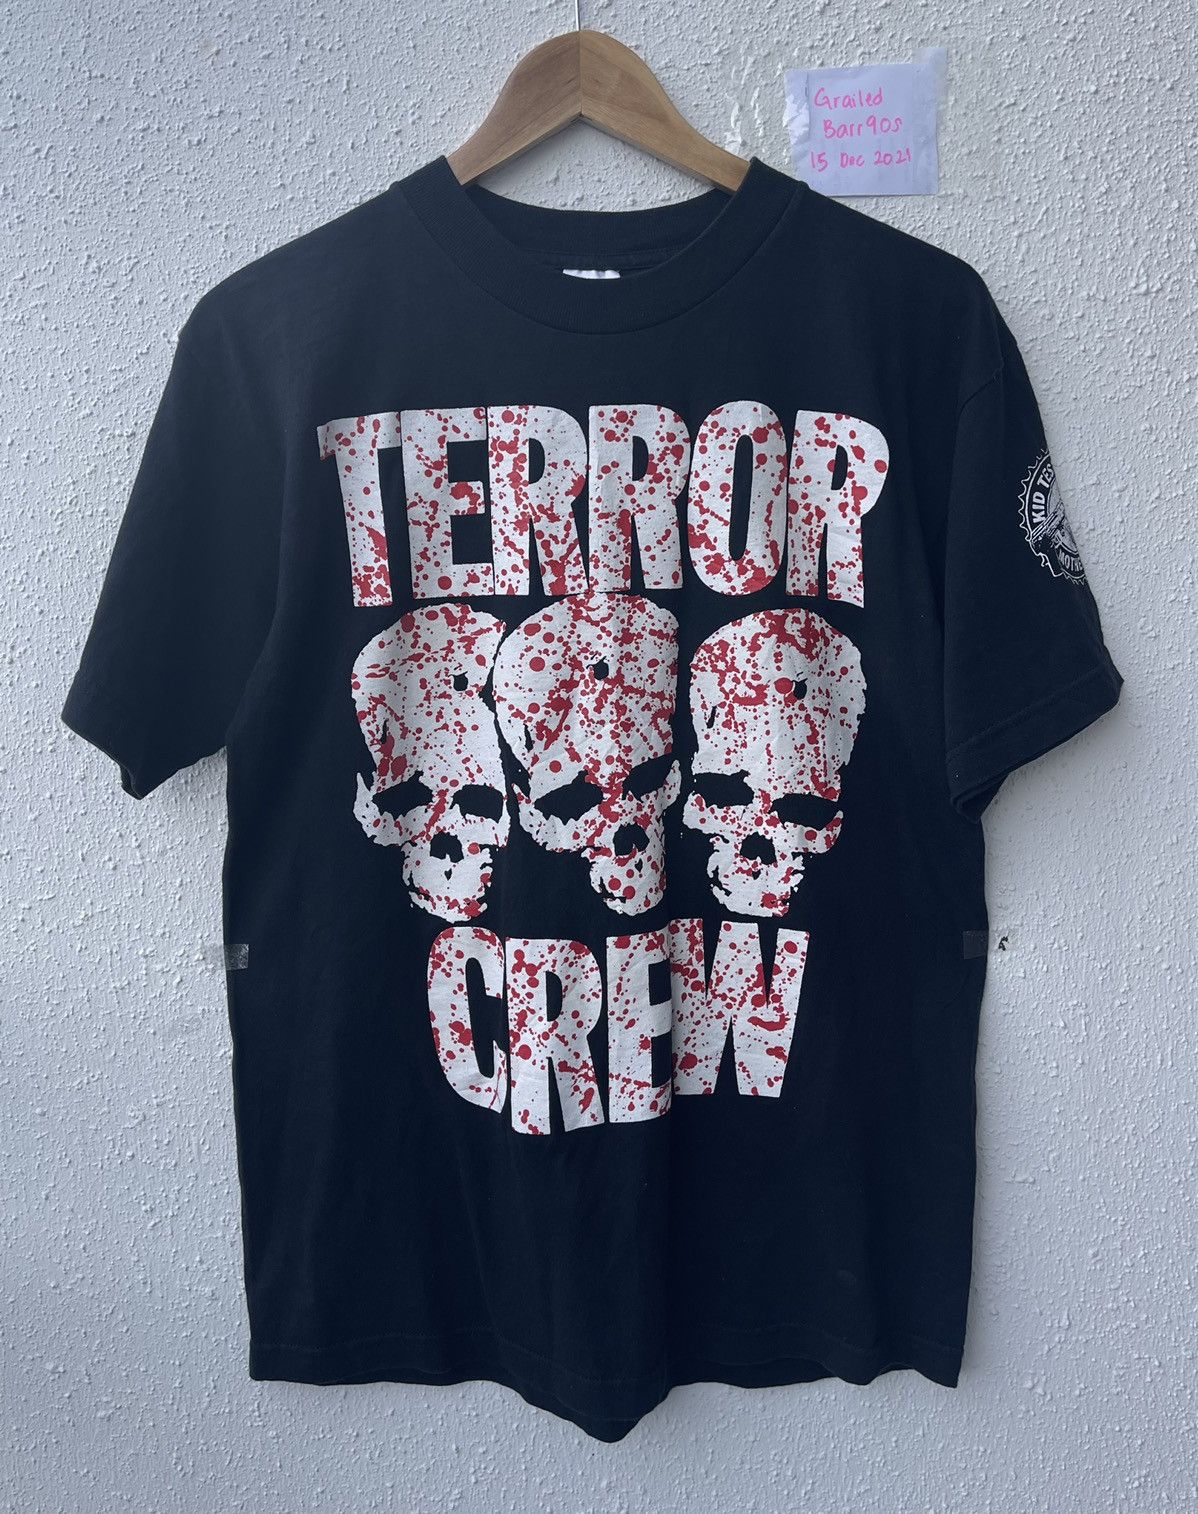 80s 90s TERROR WORLDWIDE Tシャツ DON ROCK - megasoftsistemas.com.br